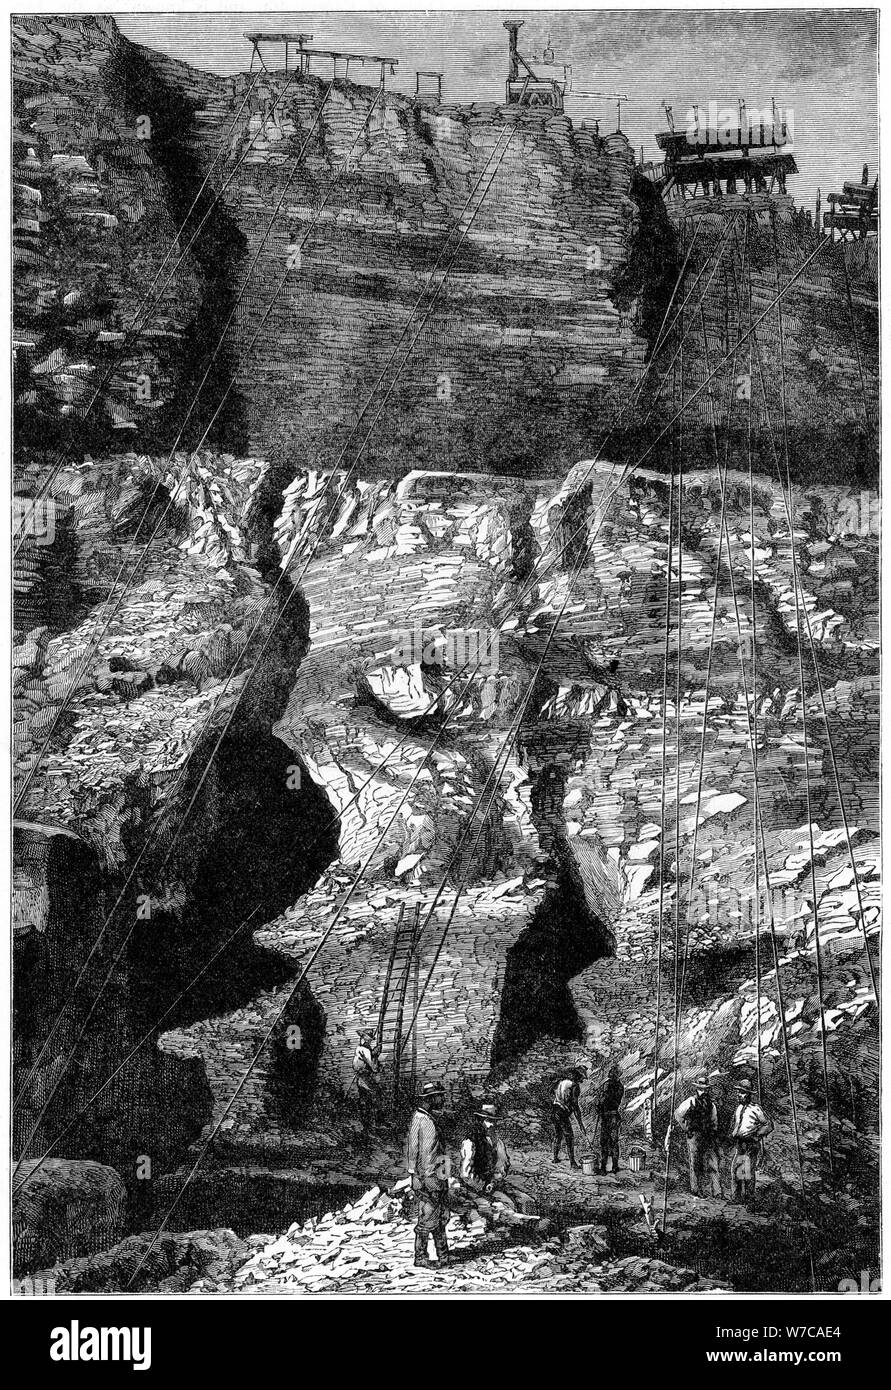 Diamond mine, Kimberley, South Africa, 1896.  Artist: Anon Stock Photo